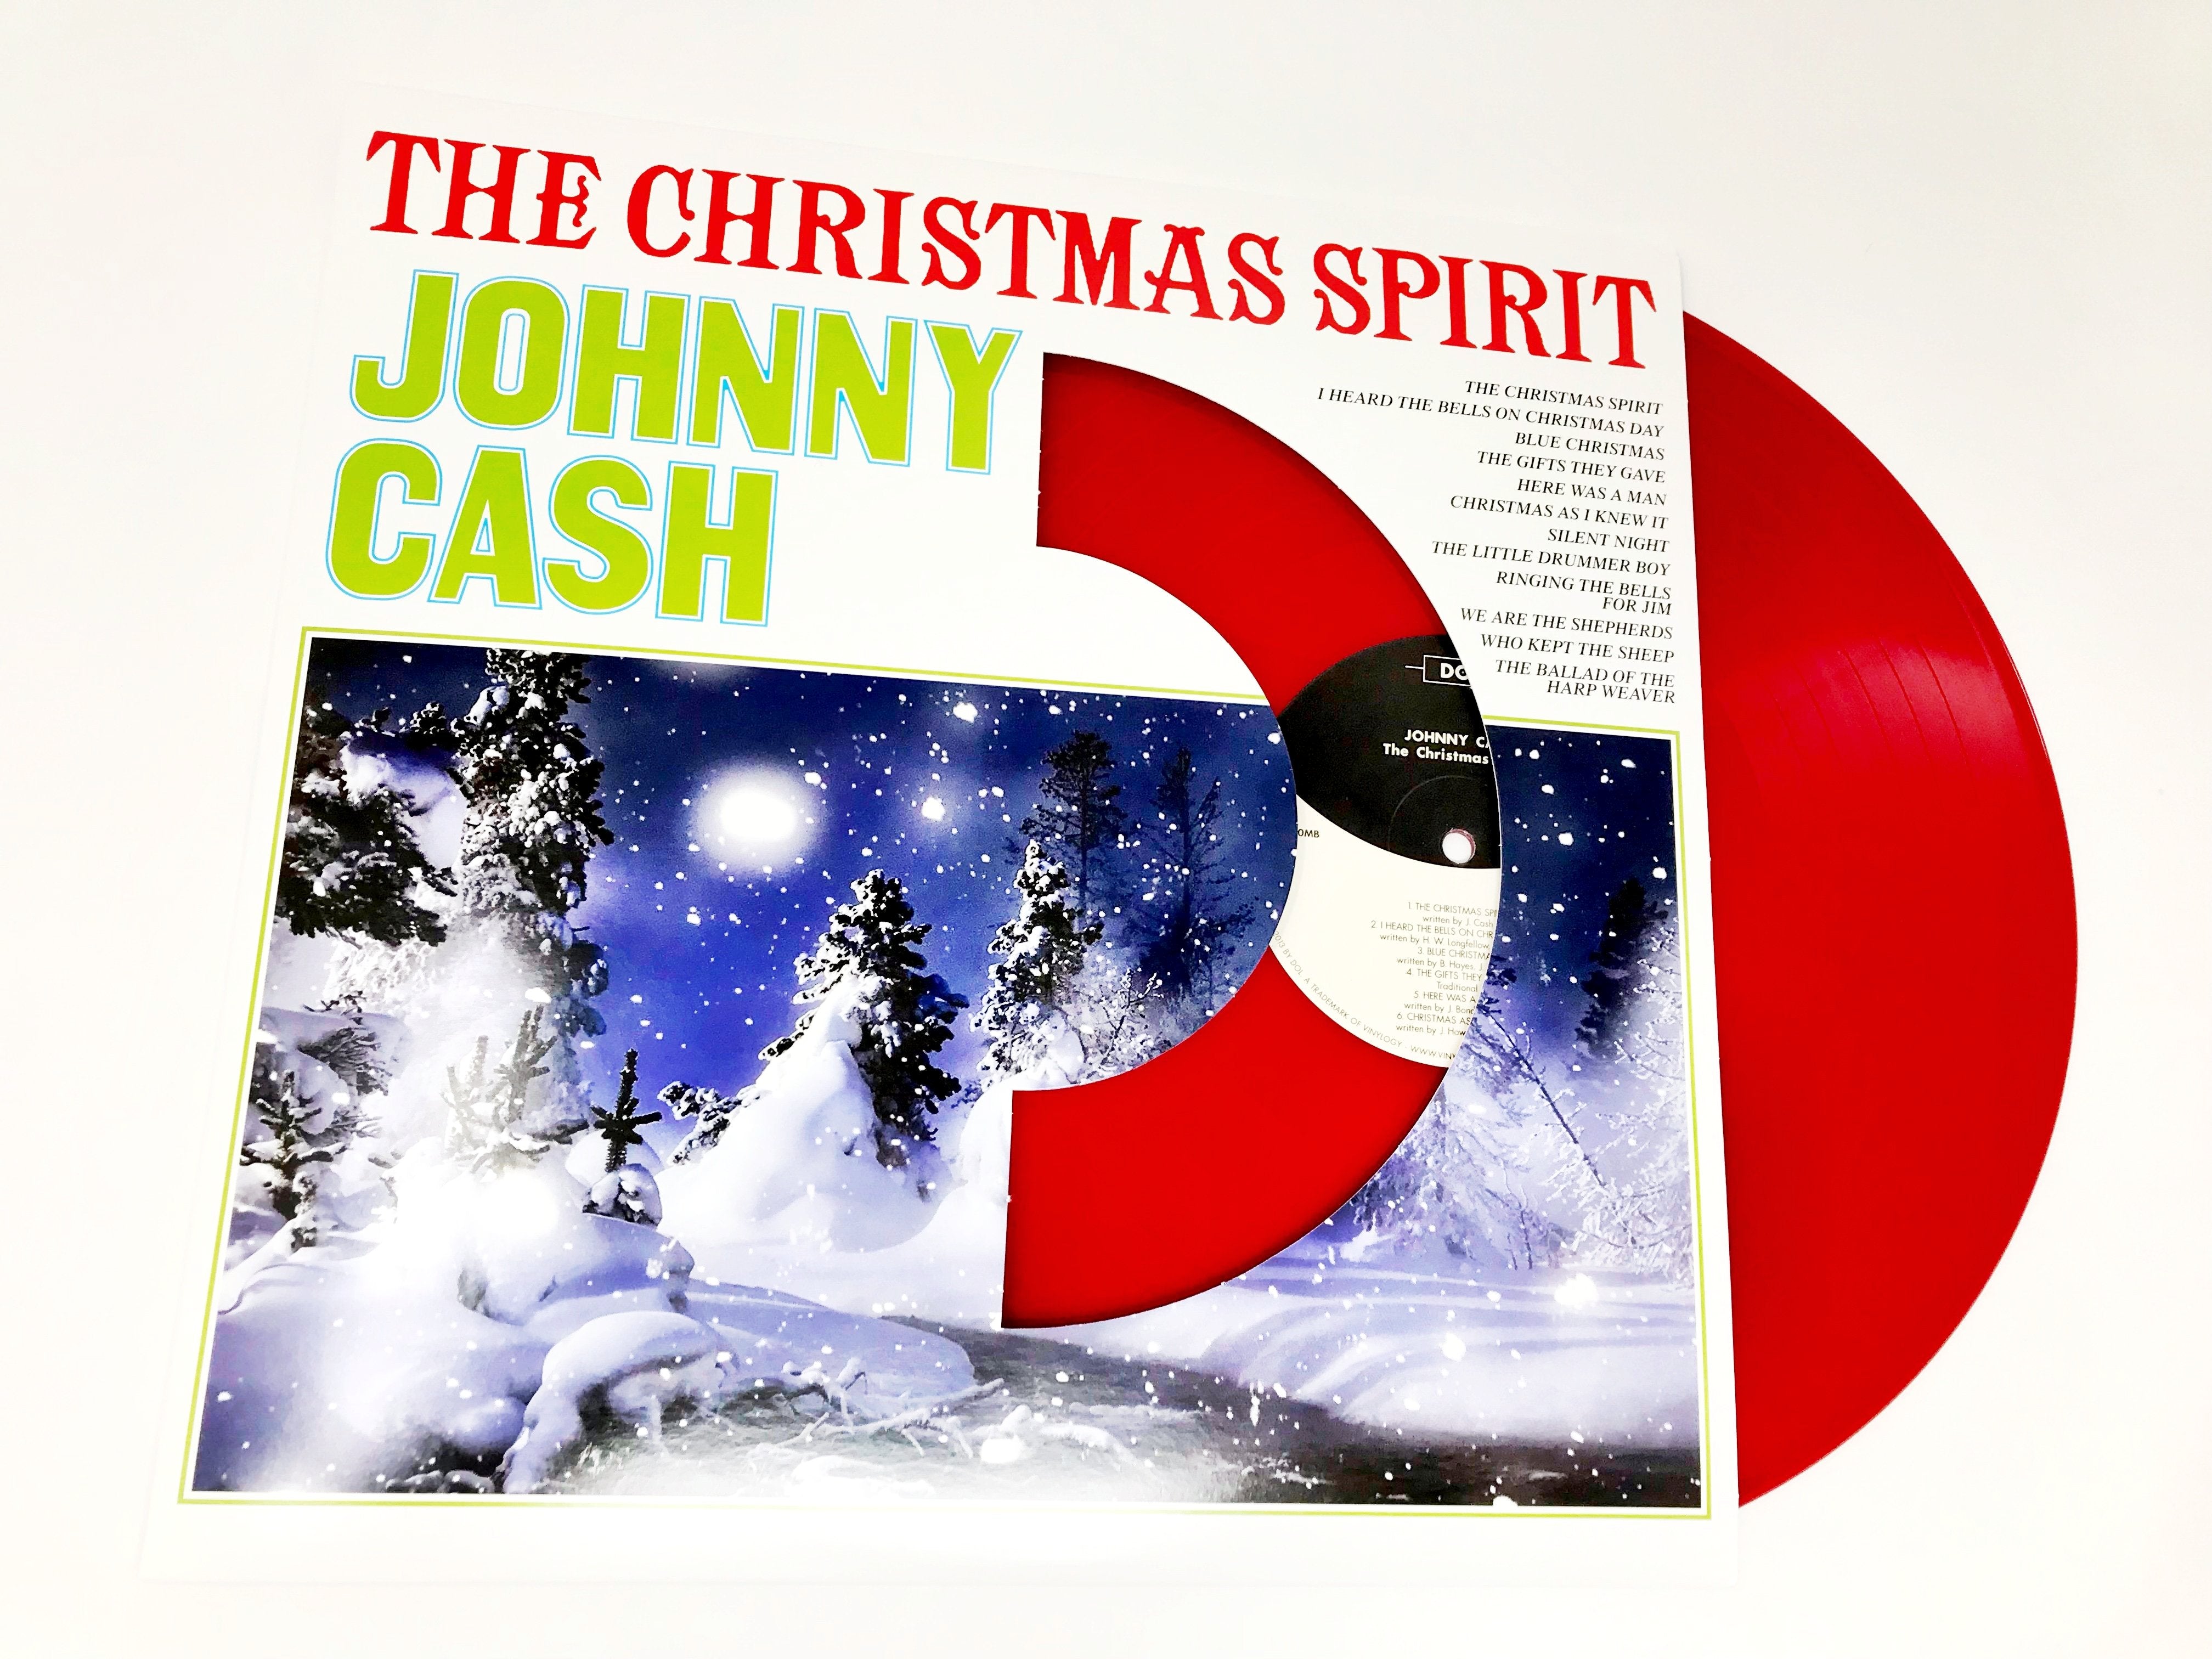 Johnny Cash - Christmas Spirit (Ltd. Ed. Red Vinyl) - Blind Tiger Record Club